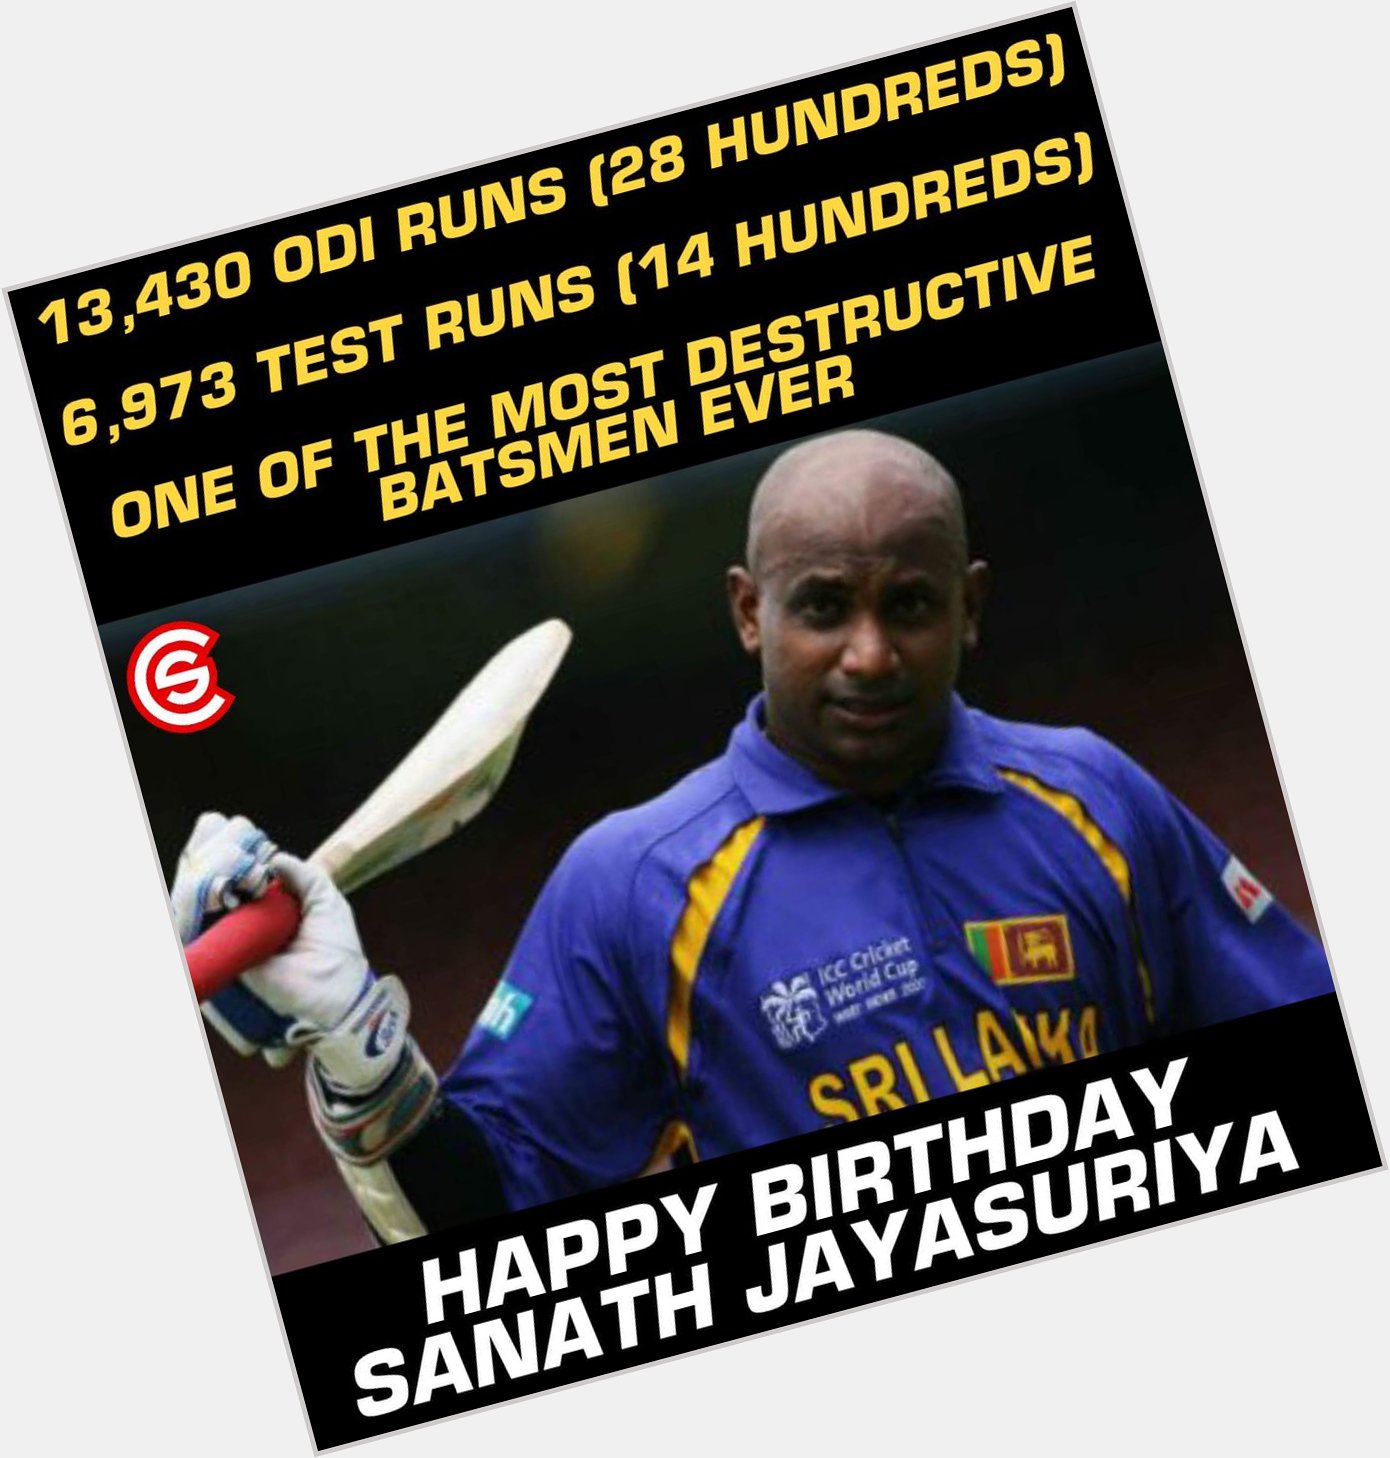 Happy Birthday, Sanath Jayasuriya!! 